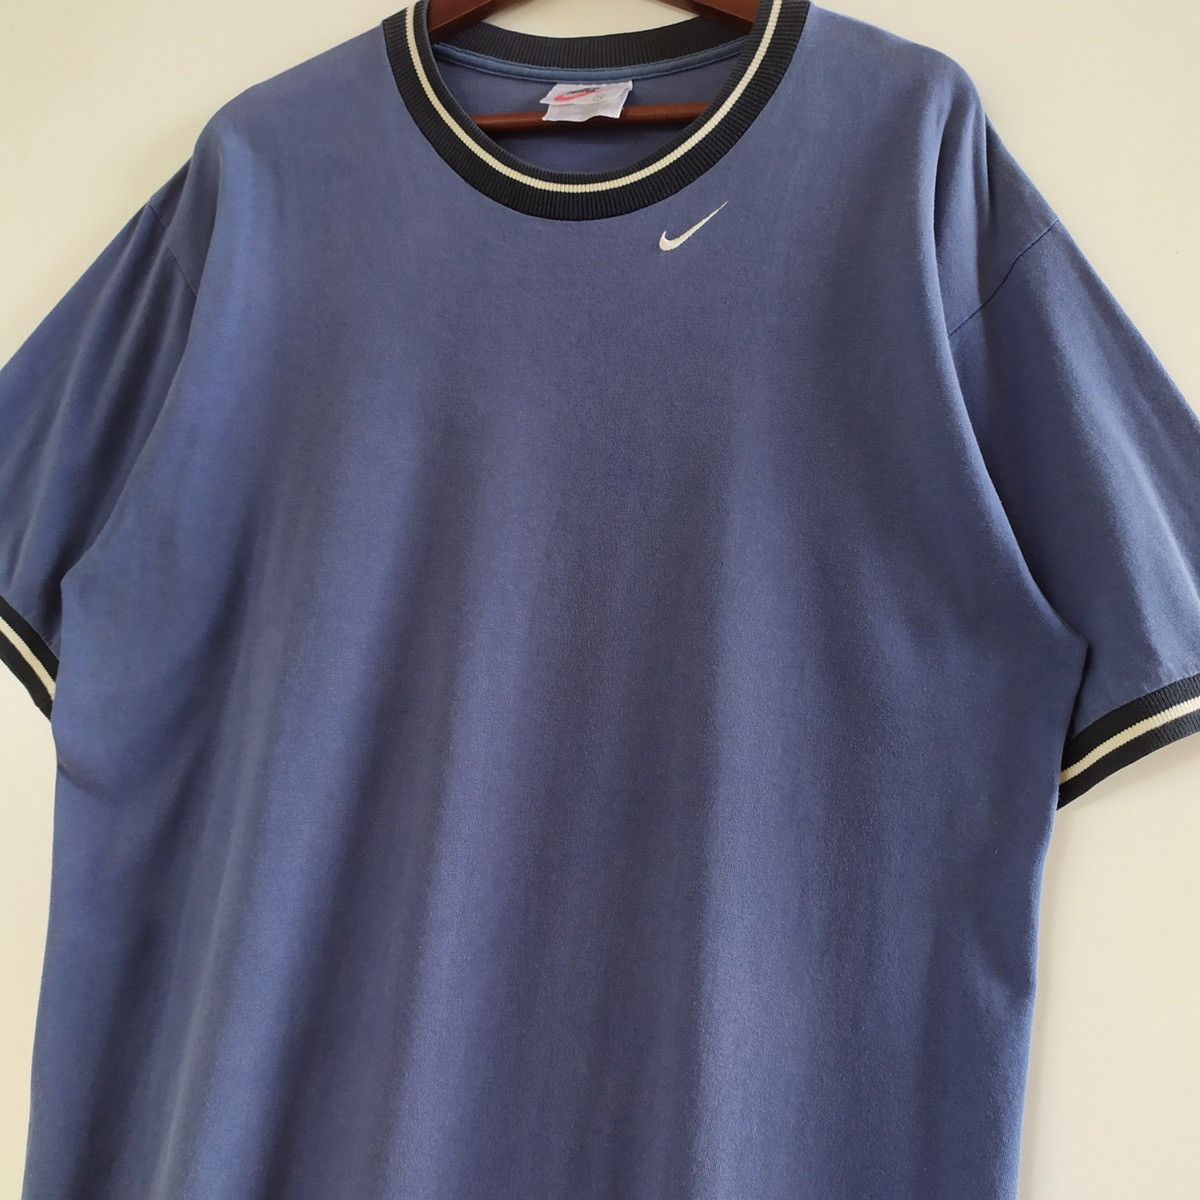 Vintage 90s Nike Ringer Tshirt - 3